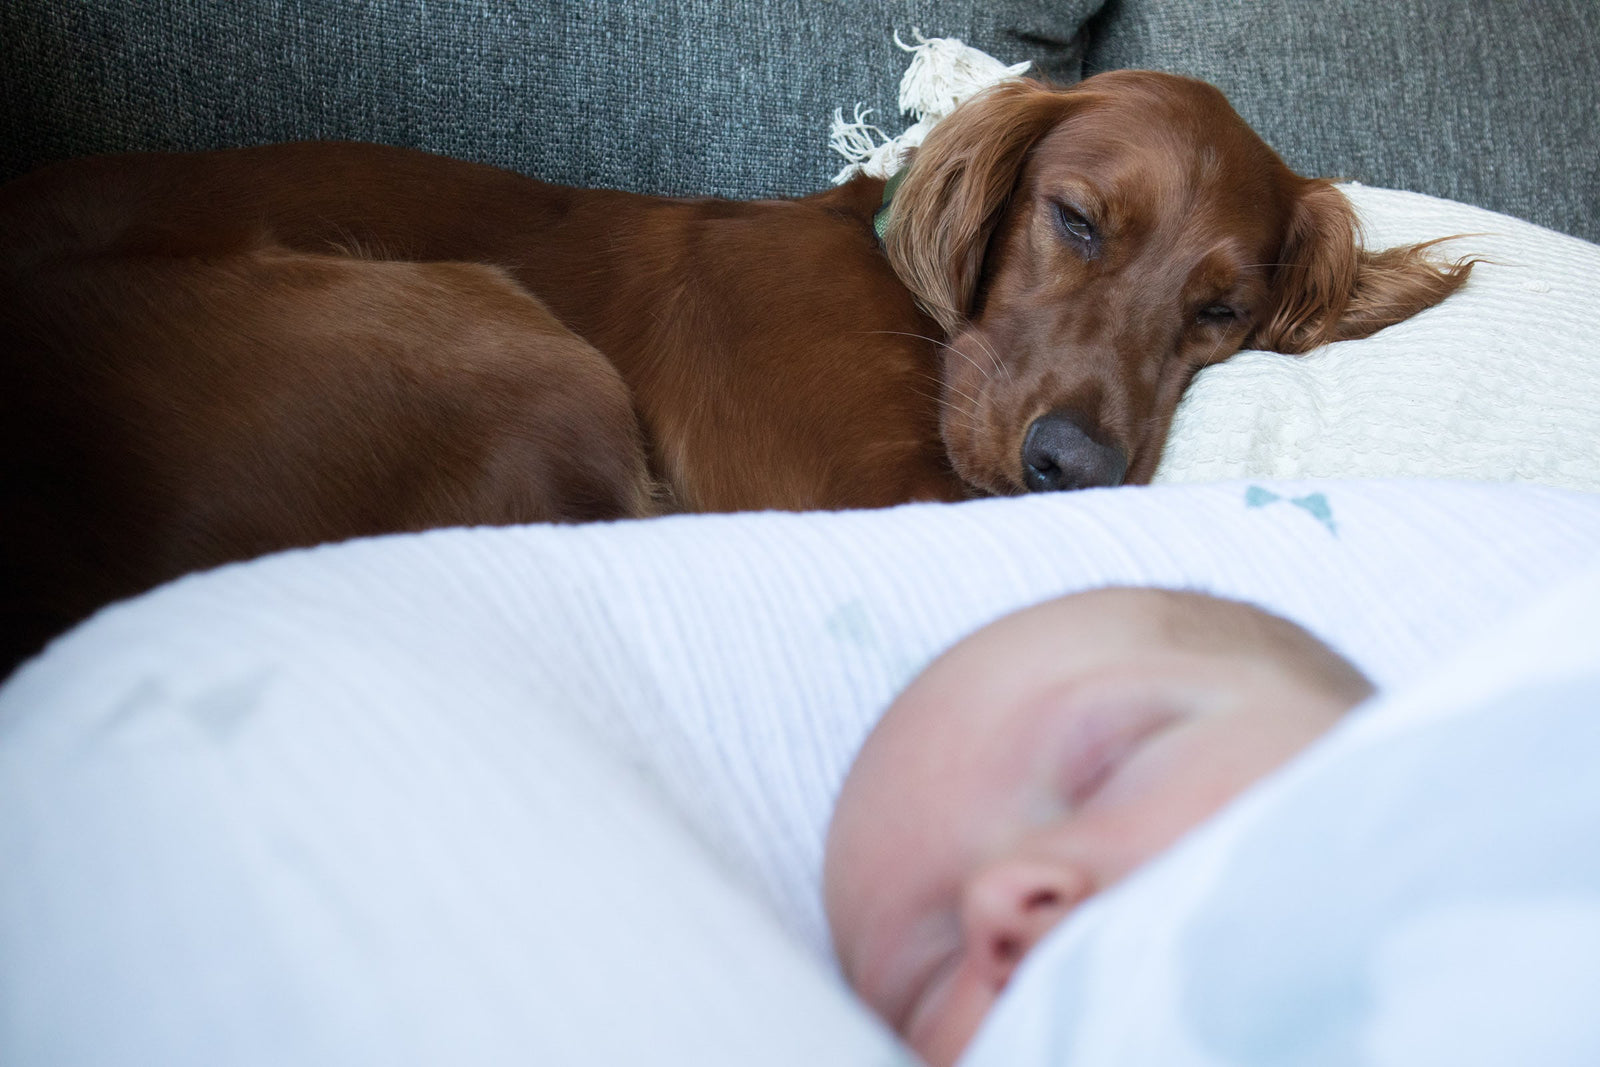 Dog laying with newborn baby